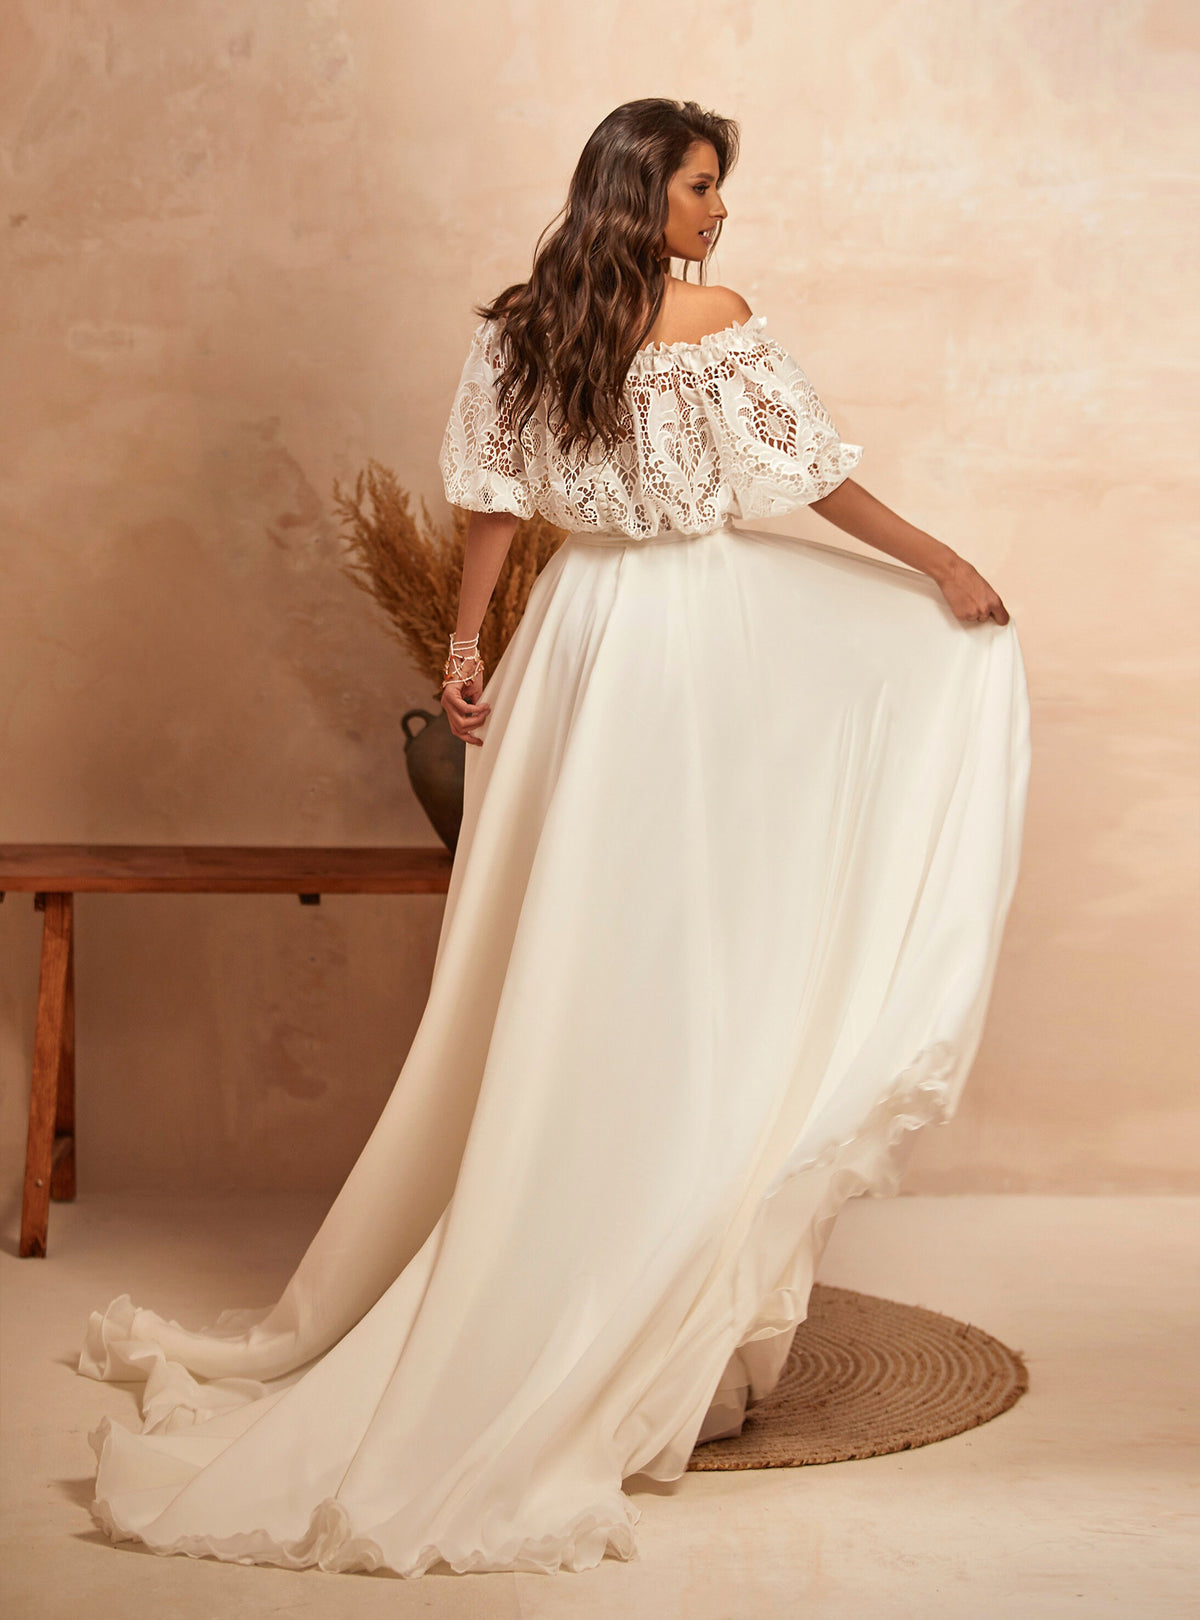 Beautiful Boho Wedding Dress Lace Bodice Off the Shoulder Bridal Gown Aline Silhouette Chiffon Skirt Summer Wedding Design Short Sleeves